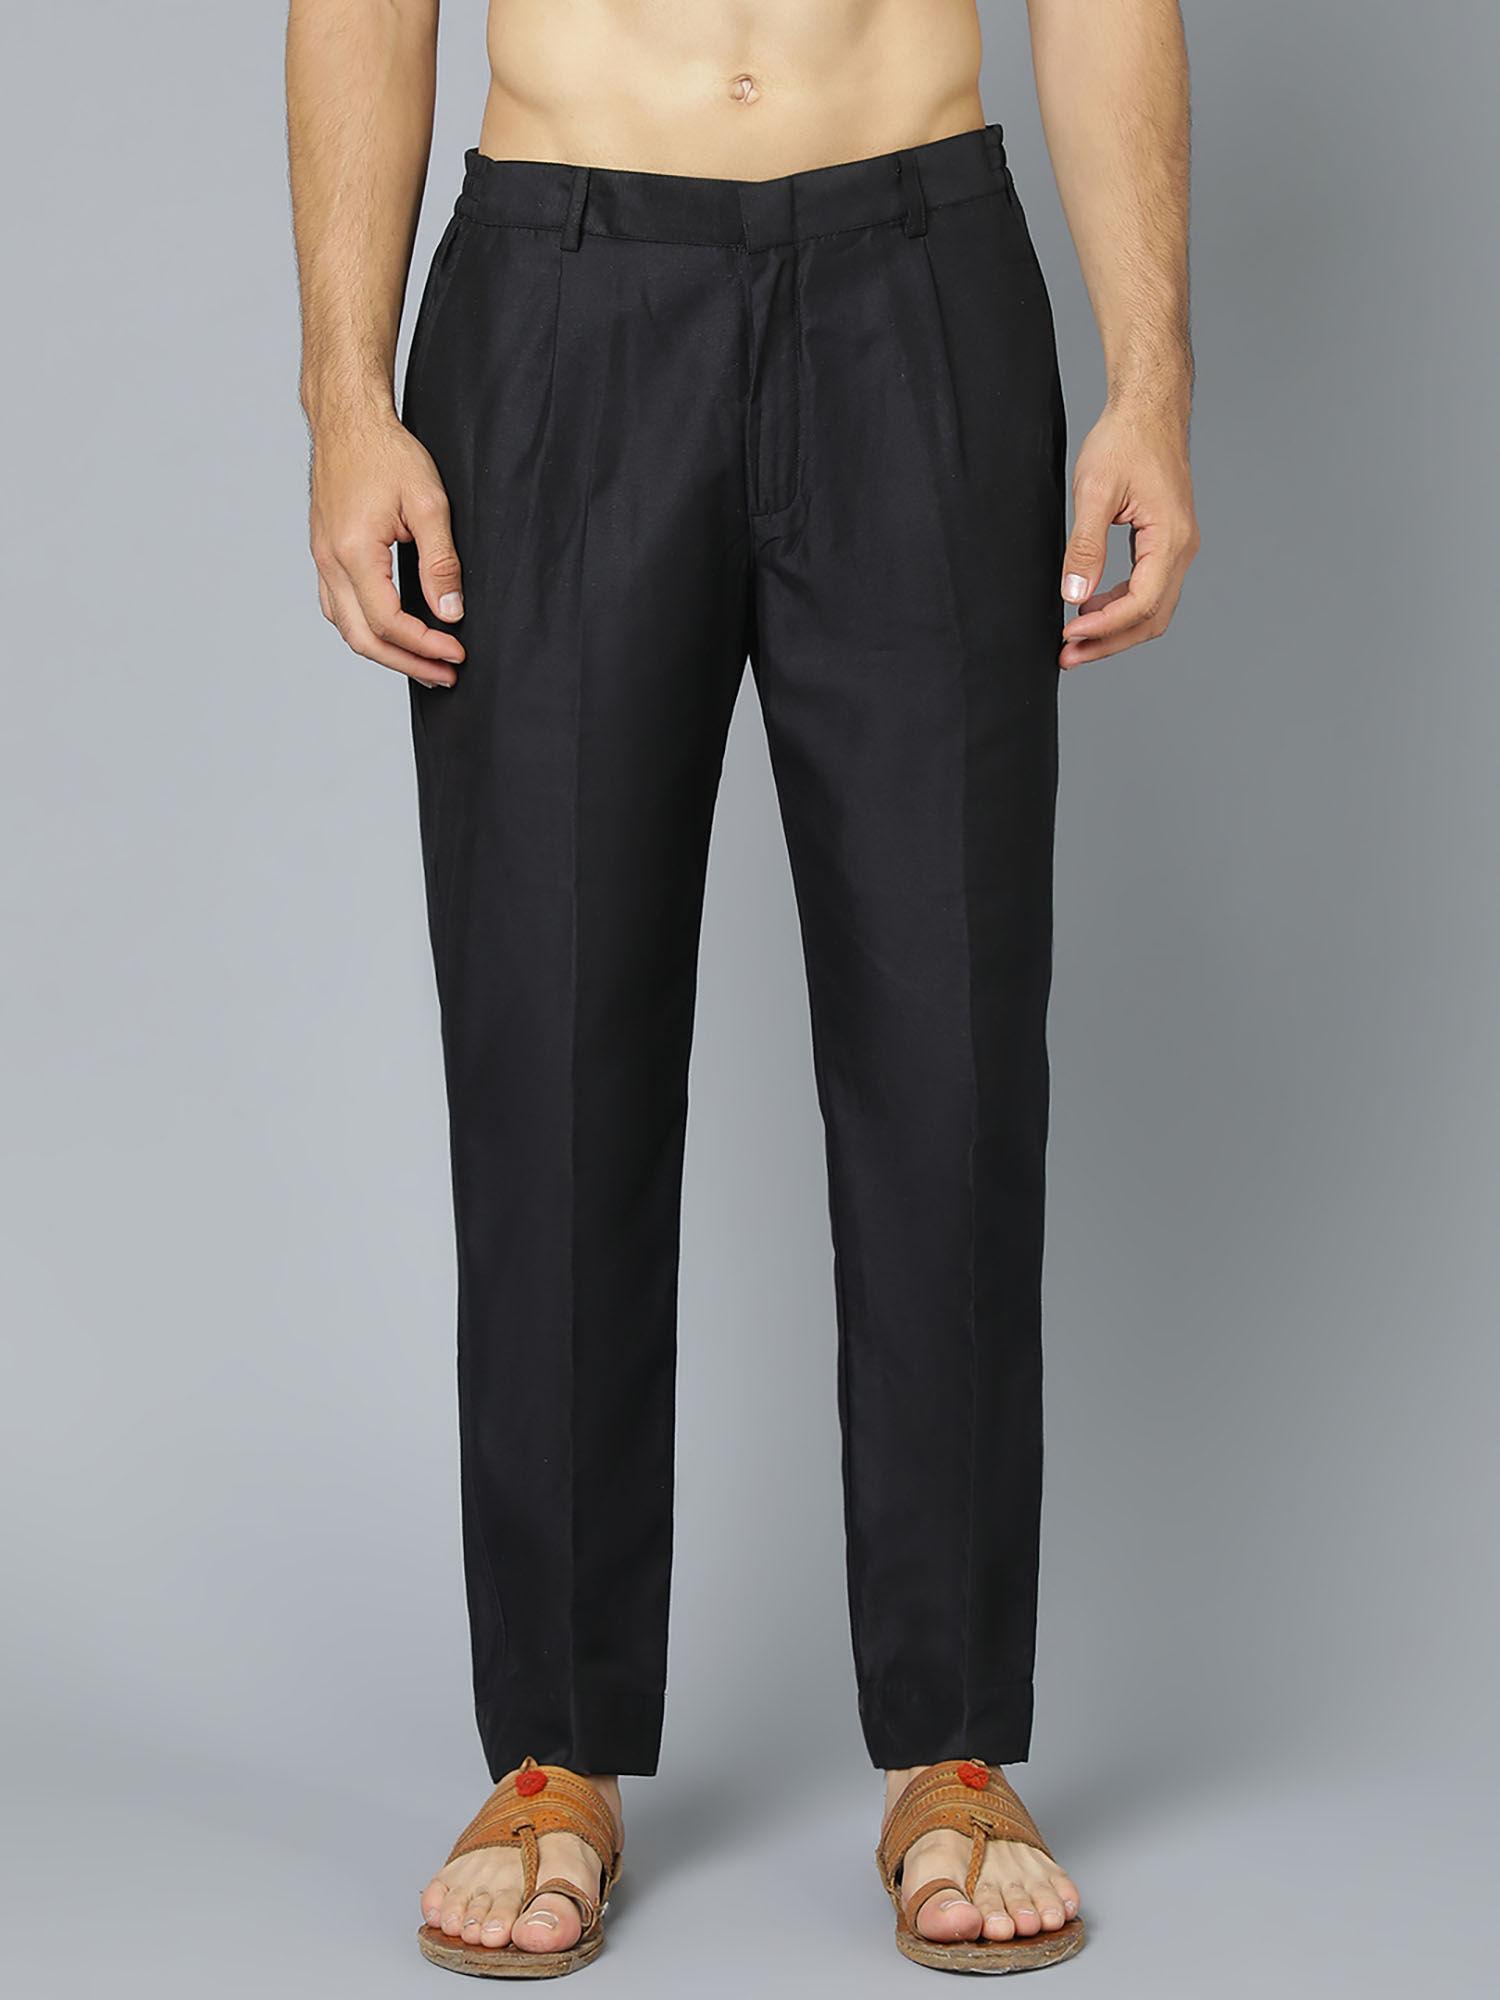 men's black viscose pant style pyjama